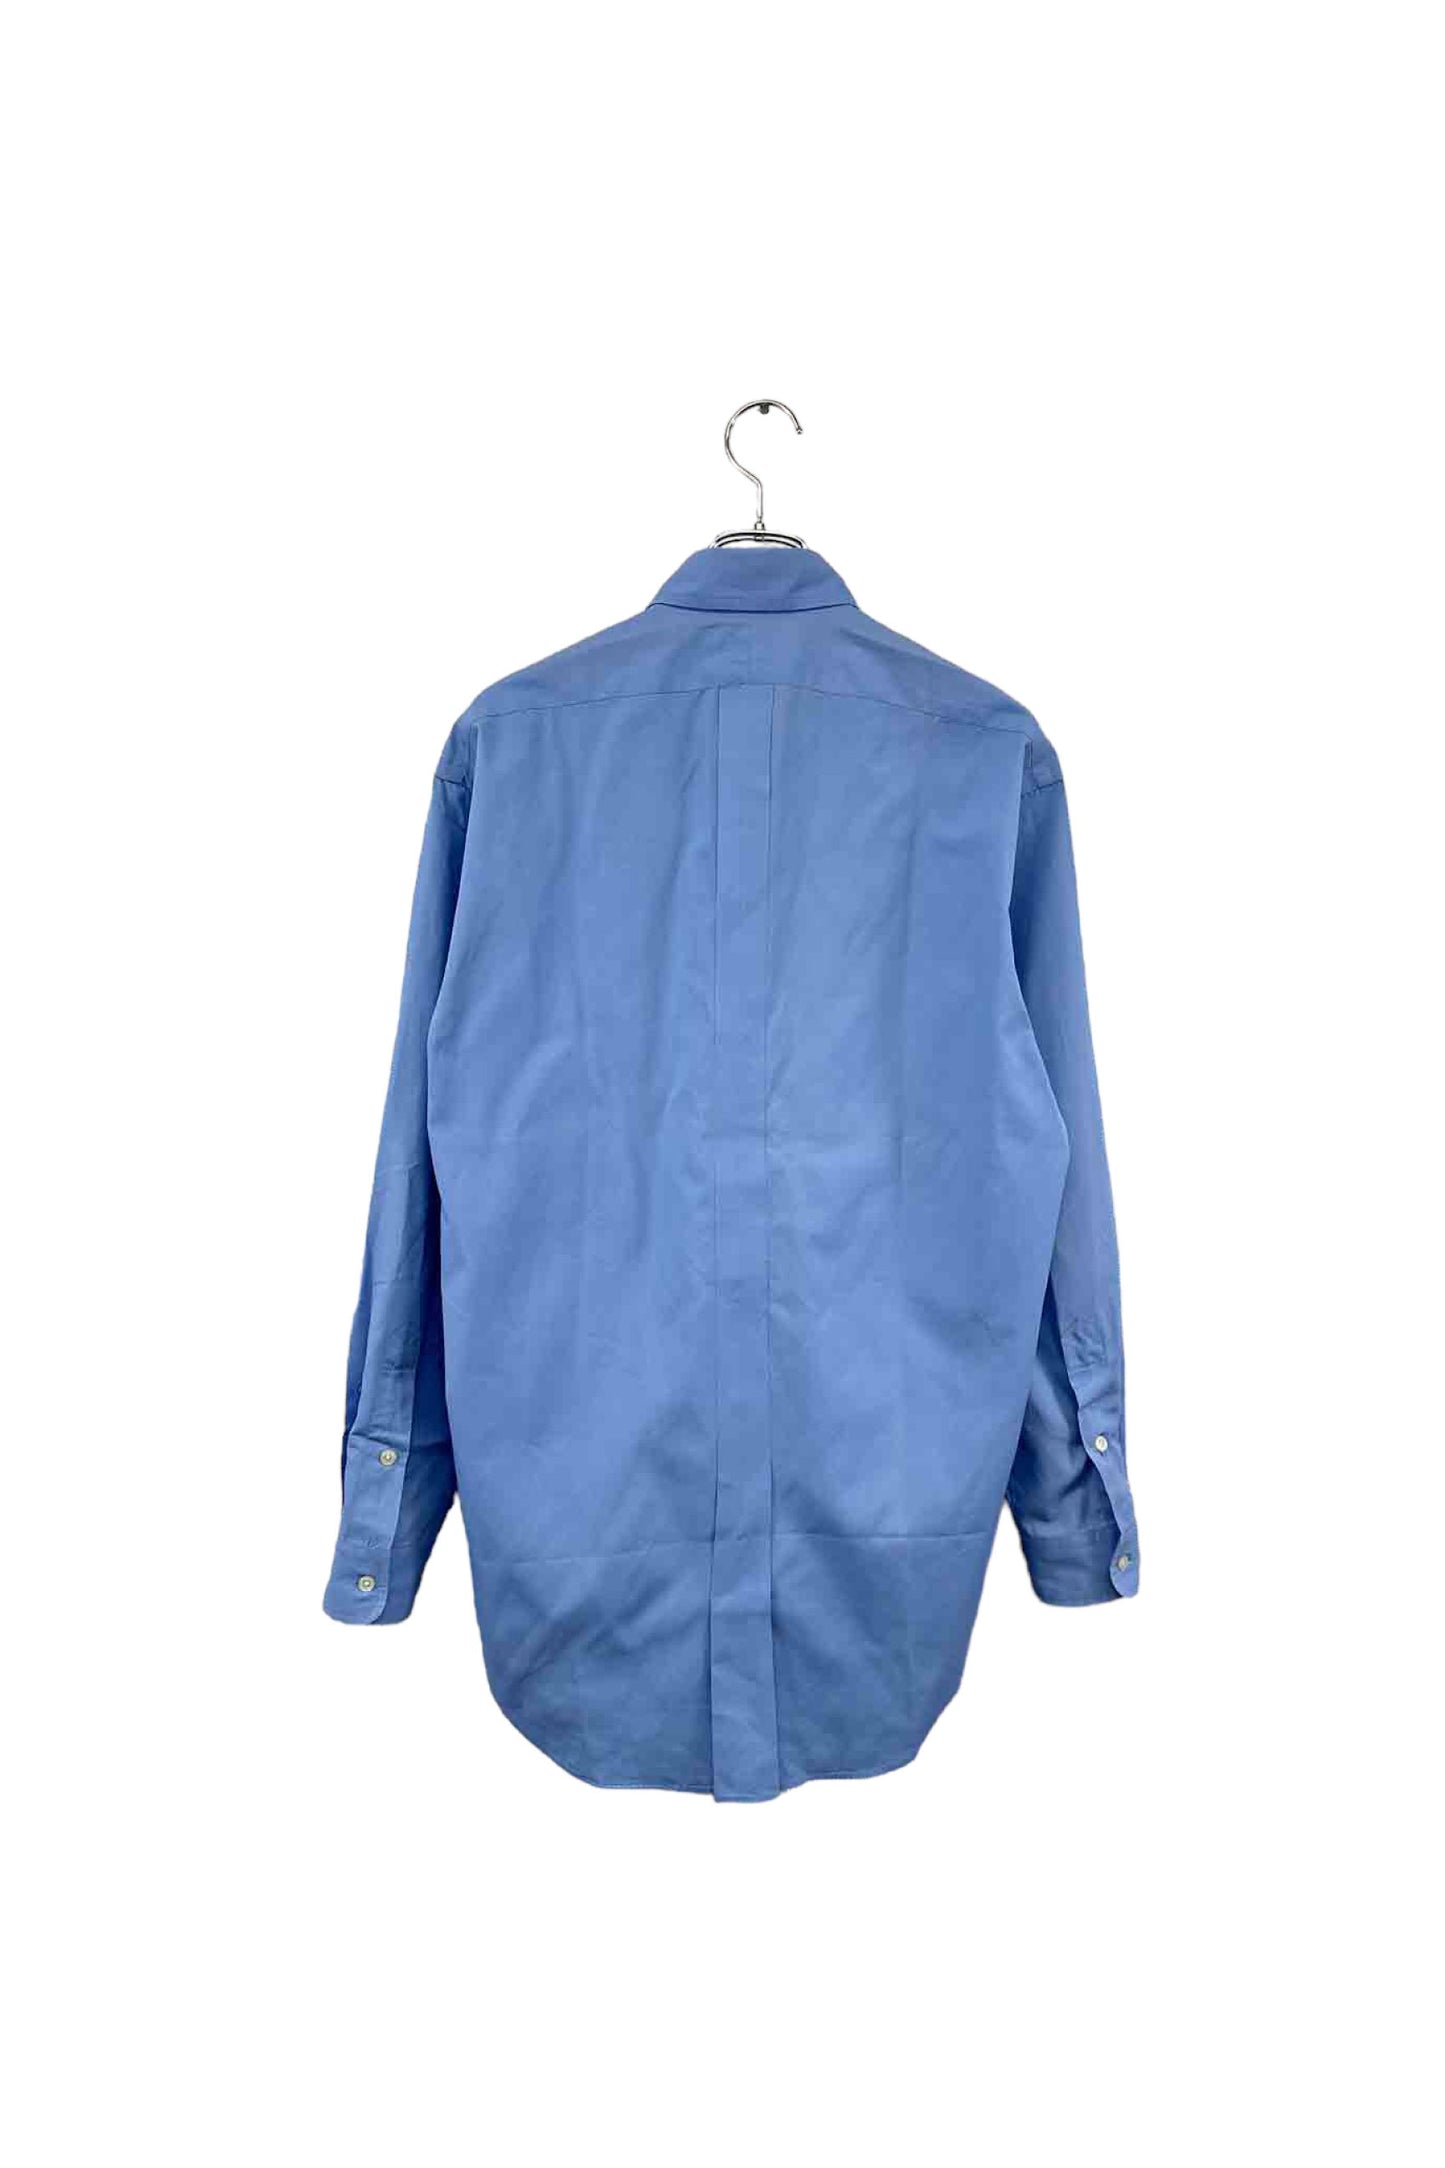 90's Ralph Lauren BLAKE TWO-PLY cotton blue shirt